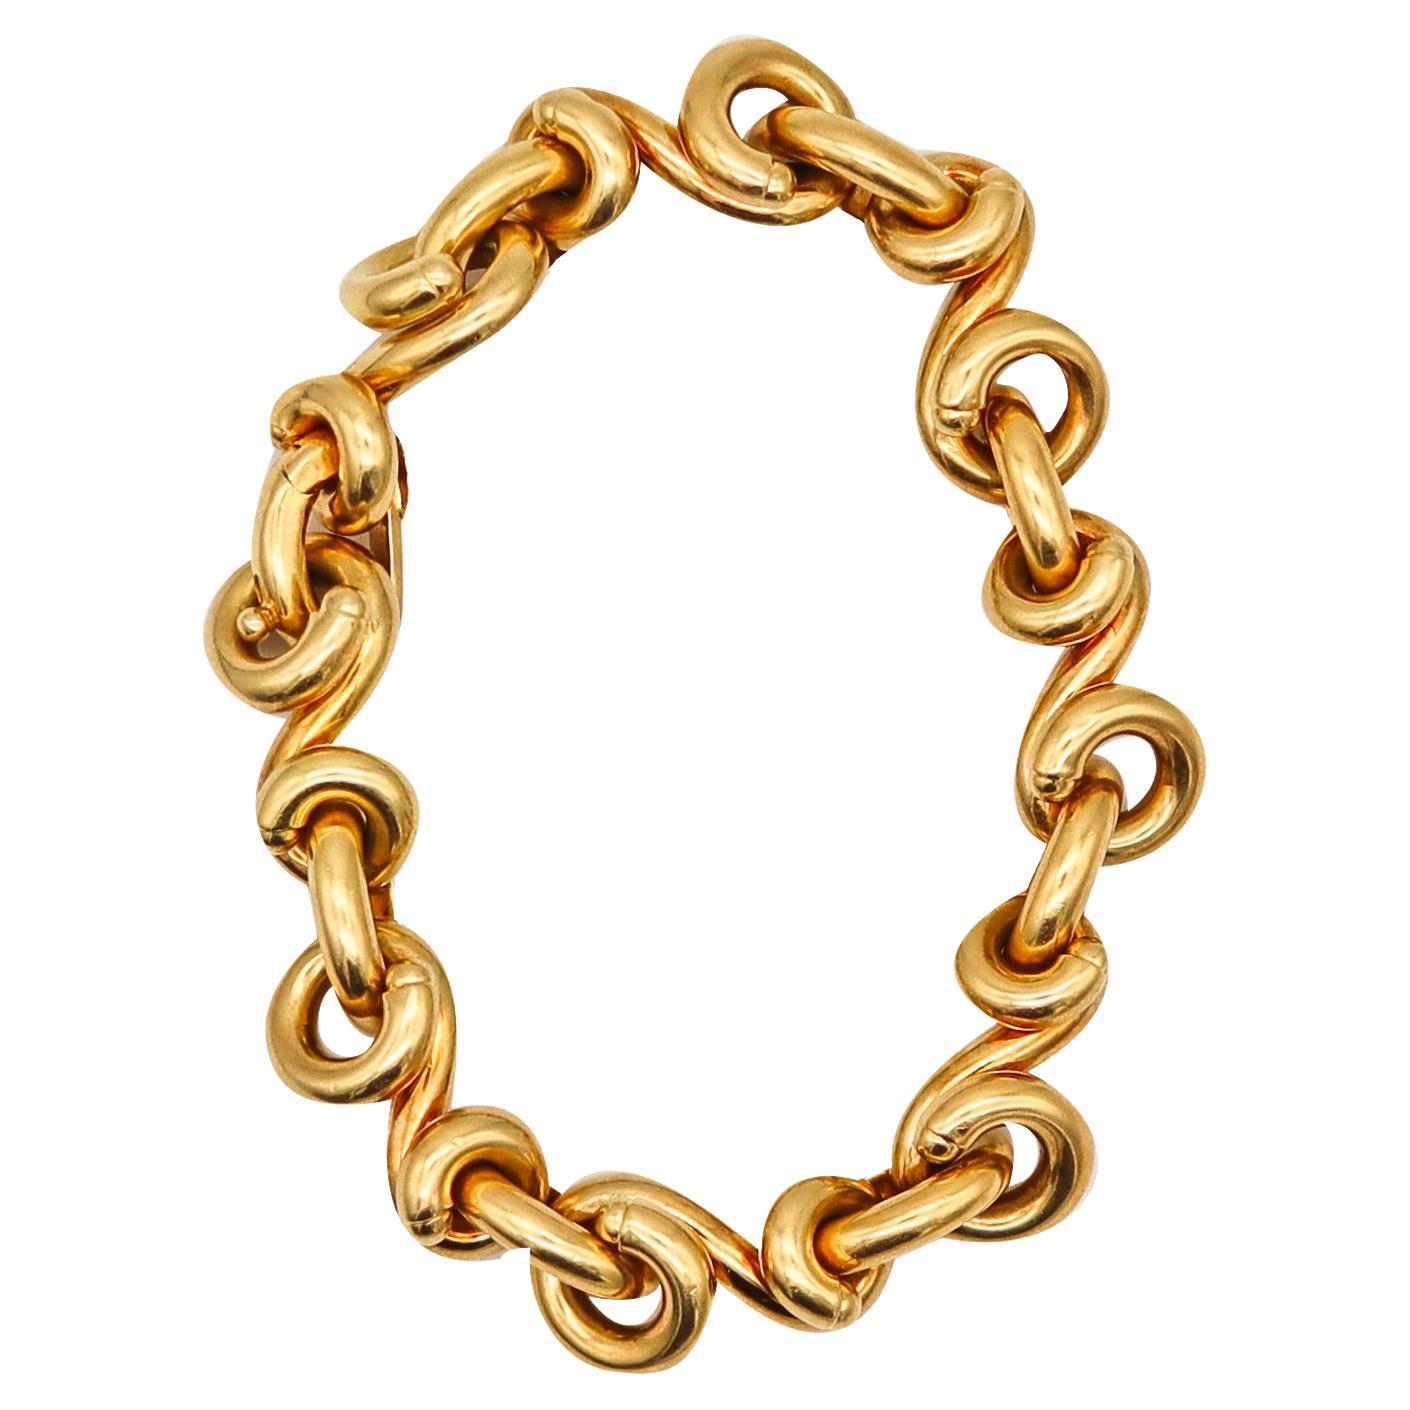 Van Cleef & Arpels 1970 Paris Twisted Links Bracelet in 18 Kt Yellow Gold